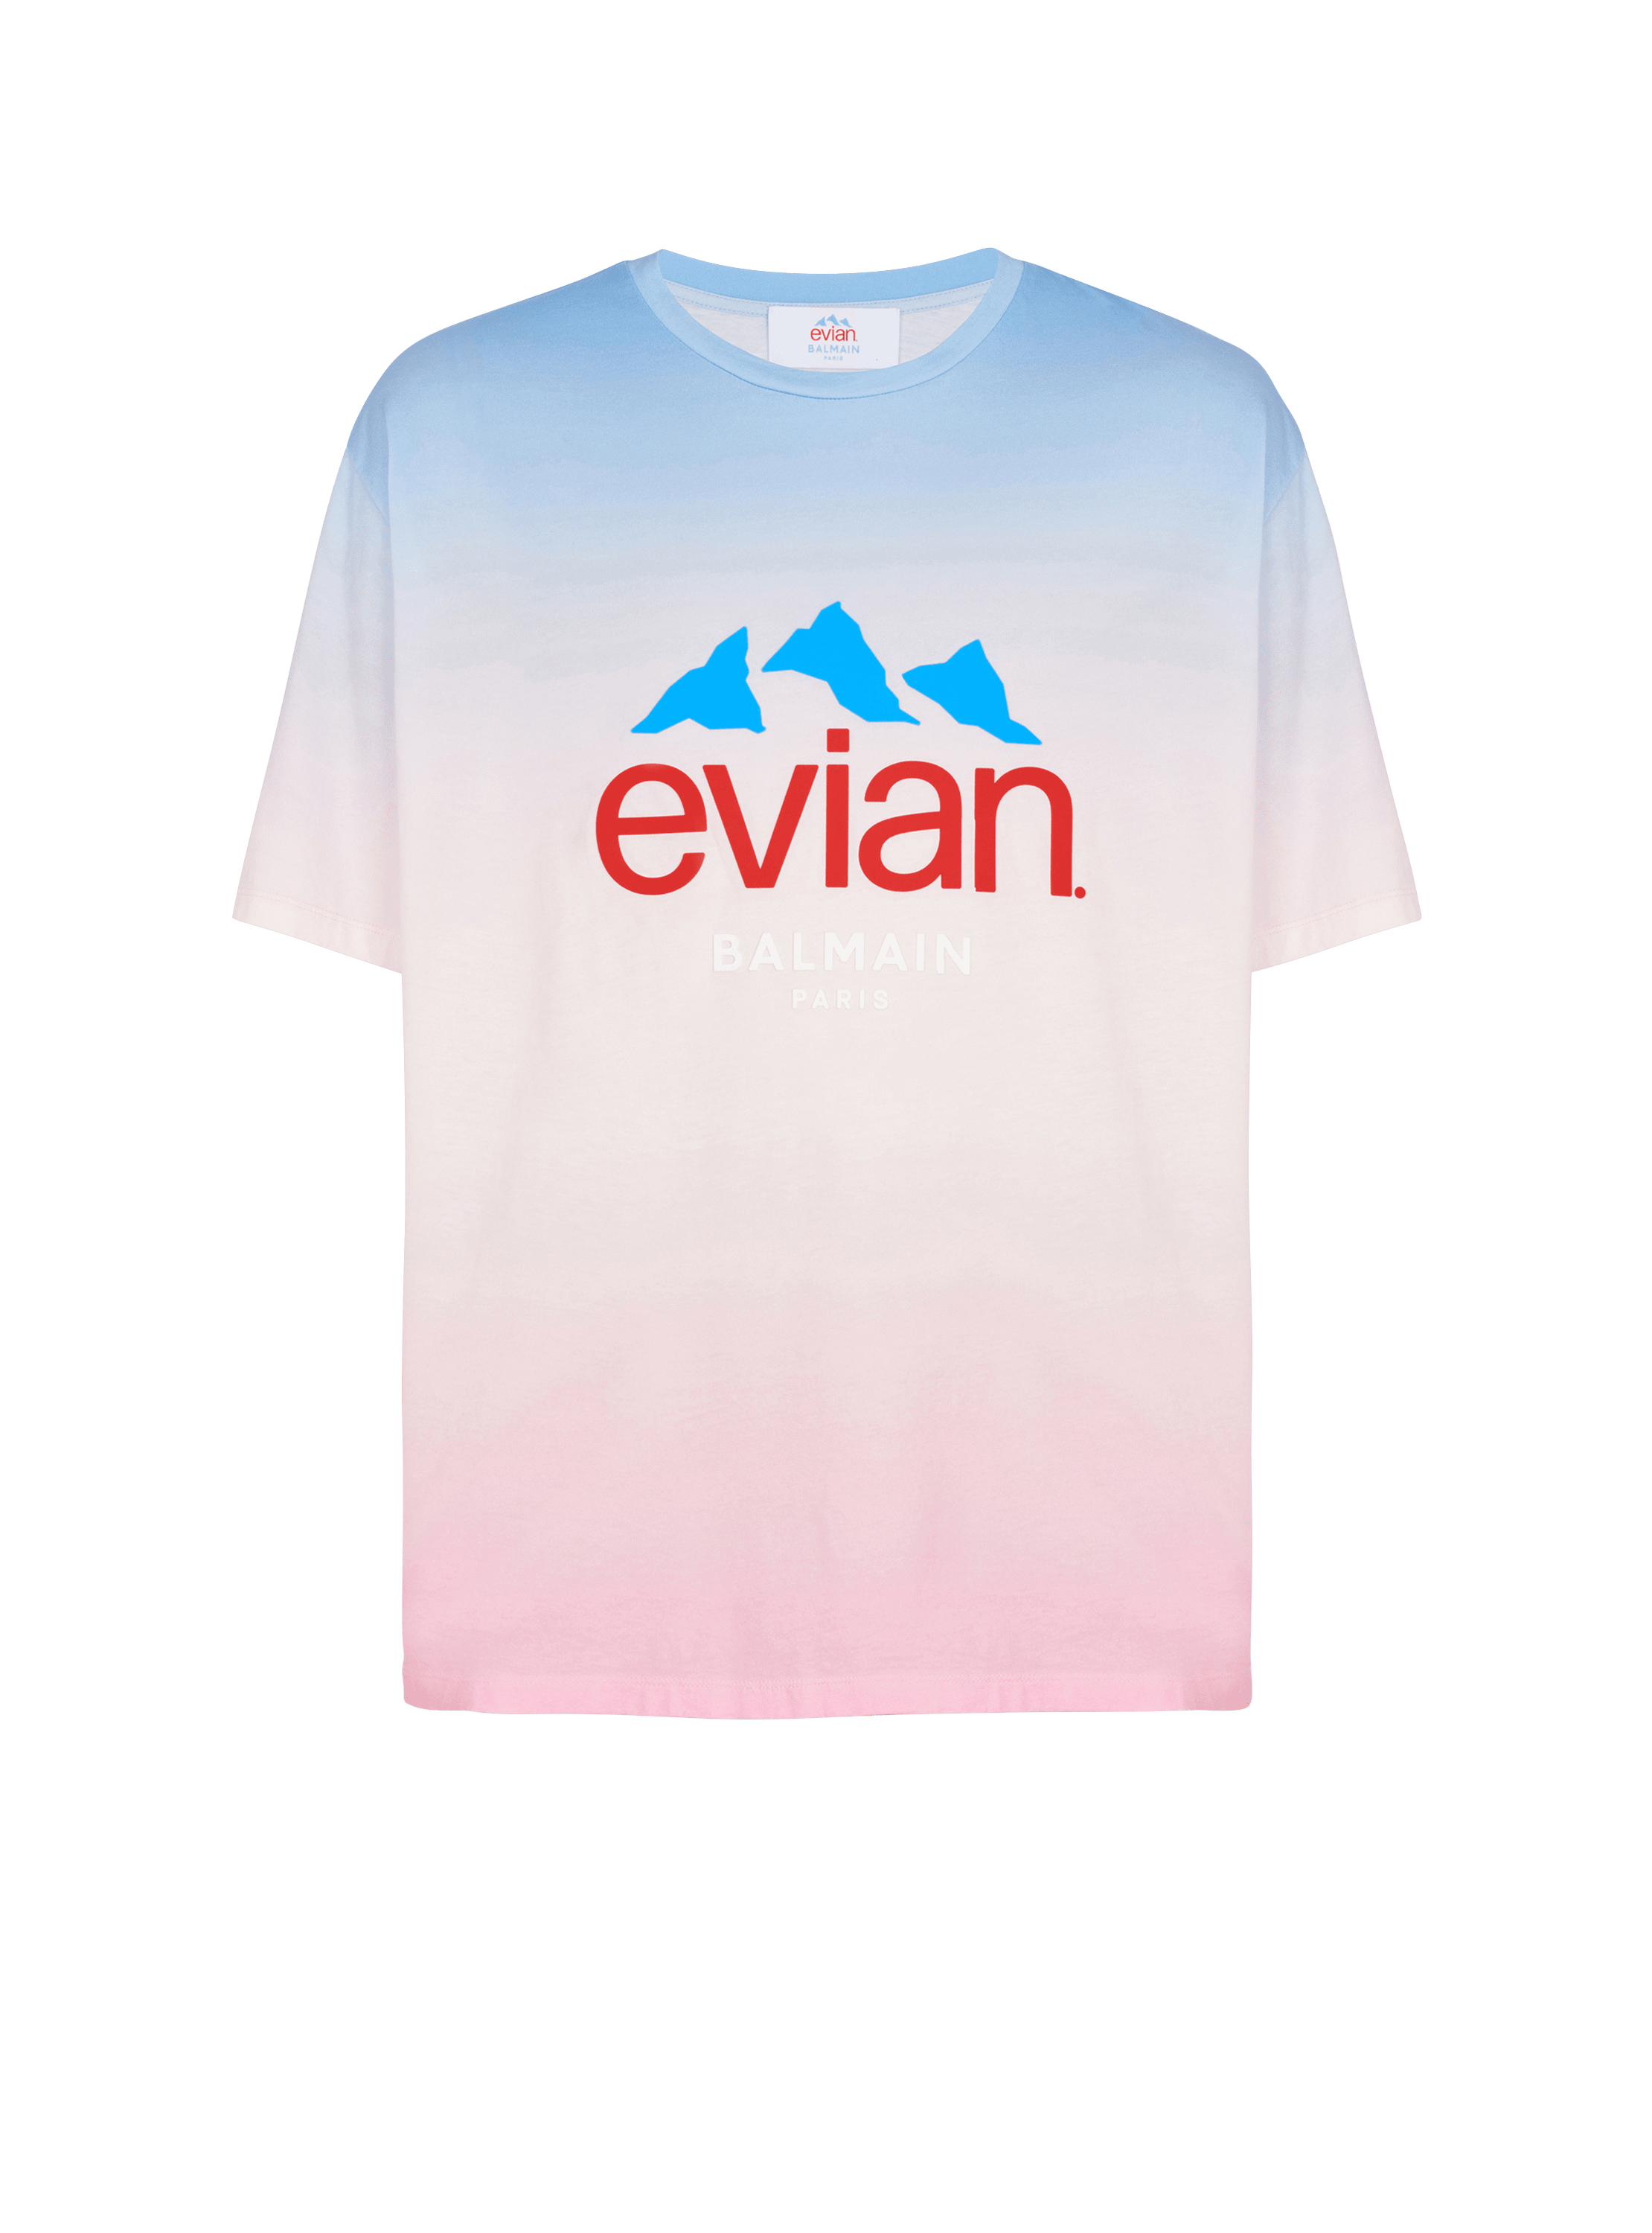 Balmain x Evian - T-Shirt mit Farbverlauf, multicolor, hi-res